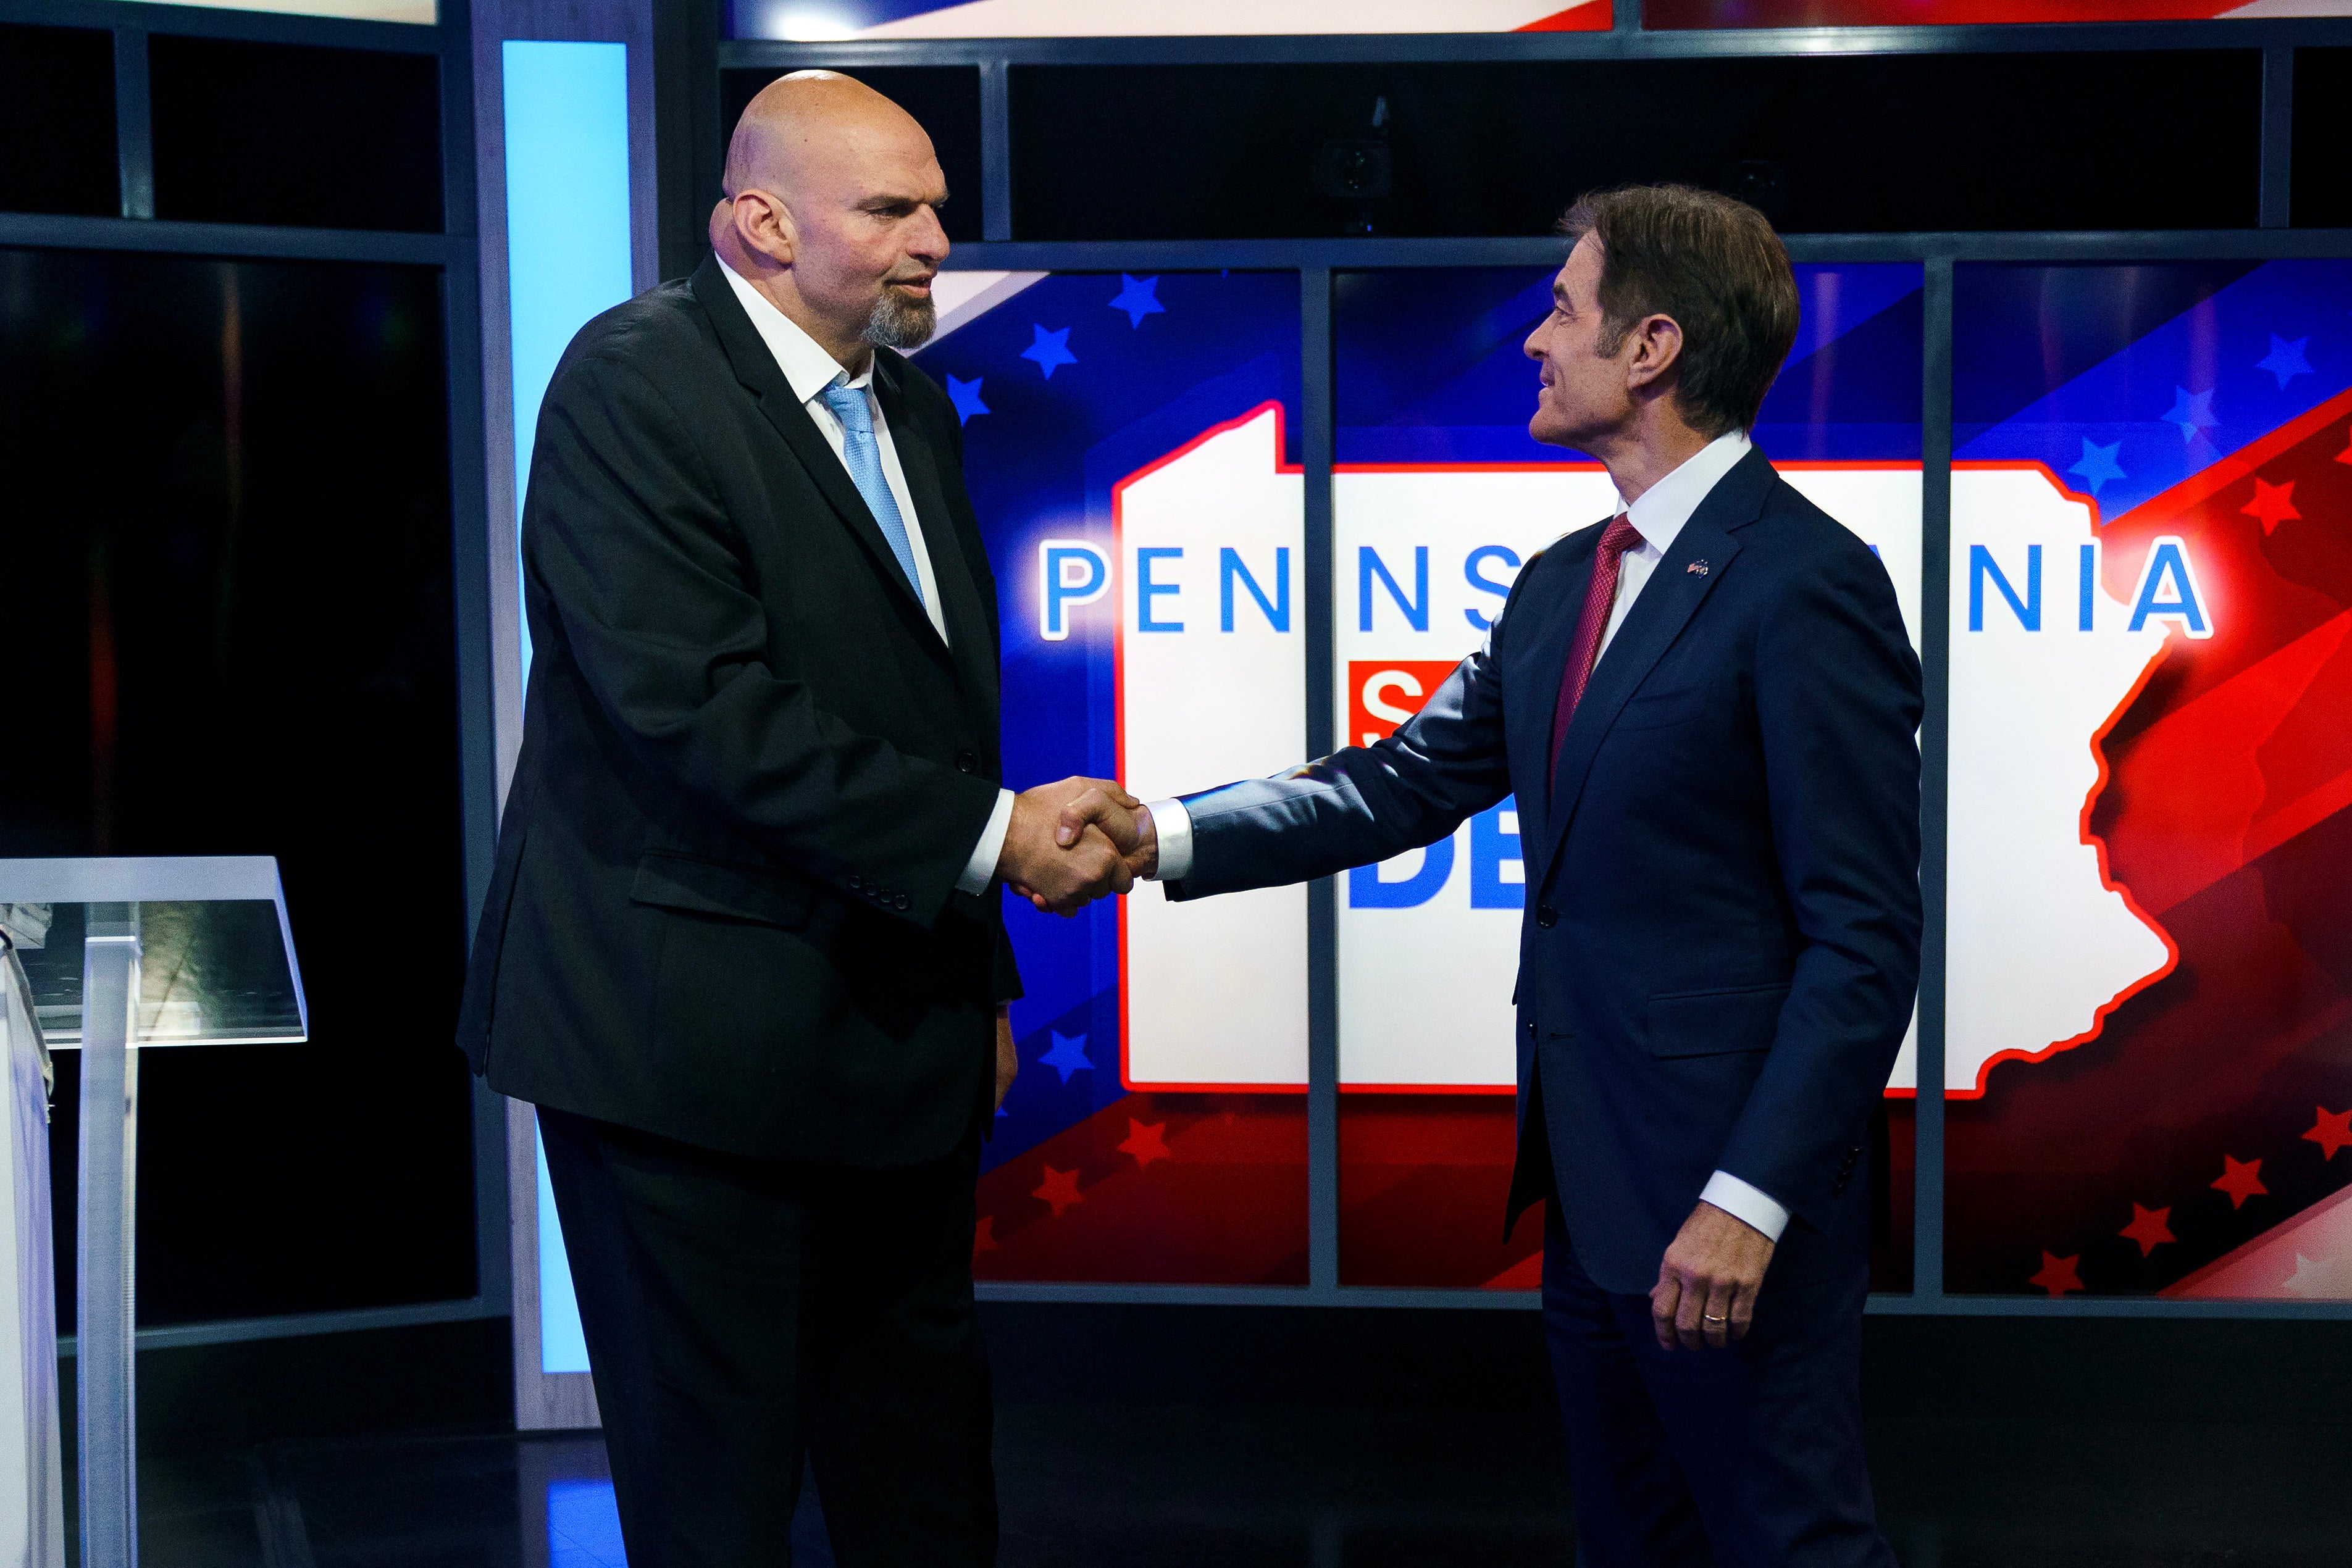 Democratic candidate Lt Gov John Fetterman (L) and Republican Pennsylvania Senate candidate Dr. Mehmet Oz (R) shaking hands prior to debate